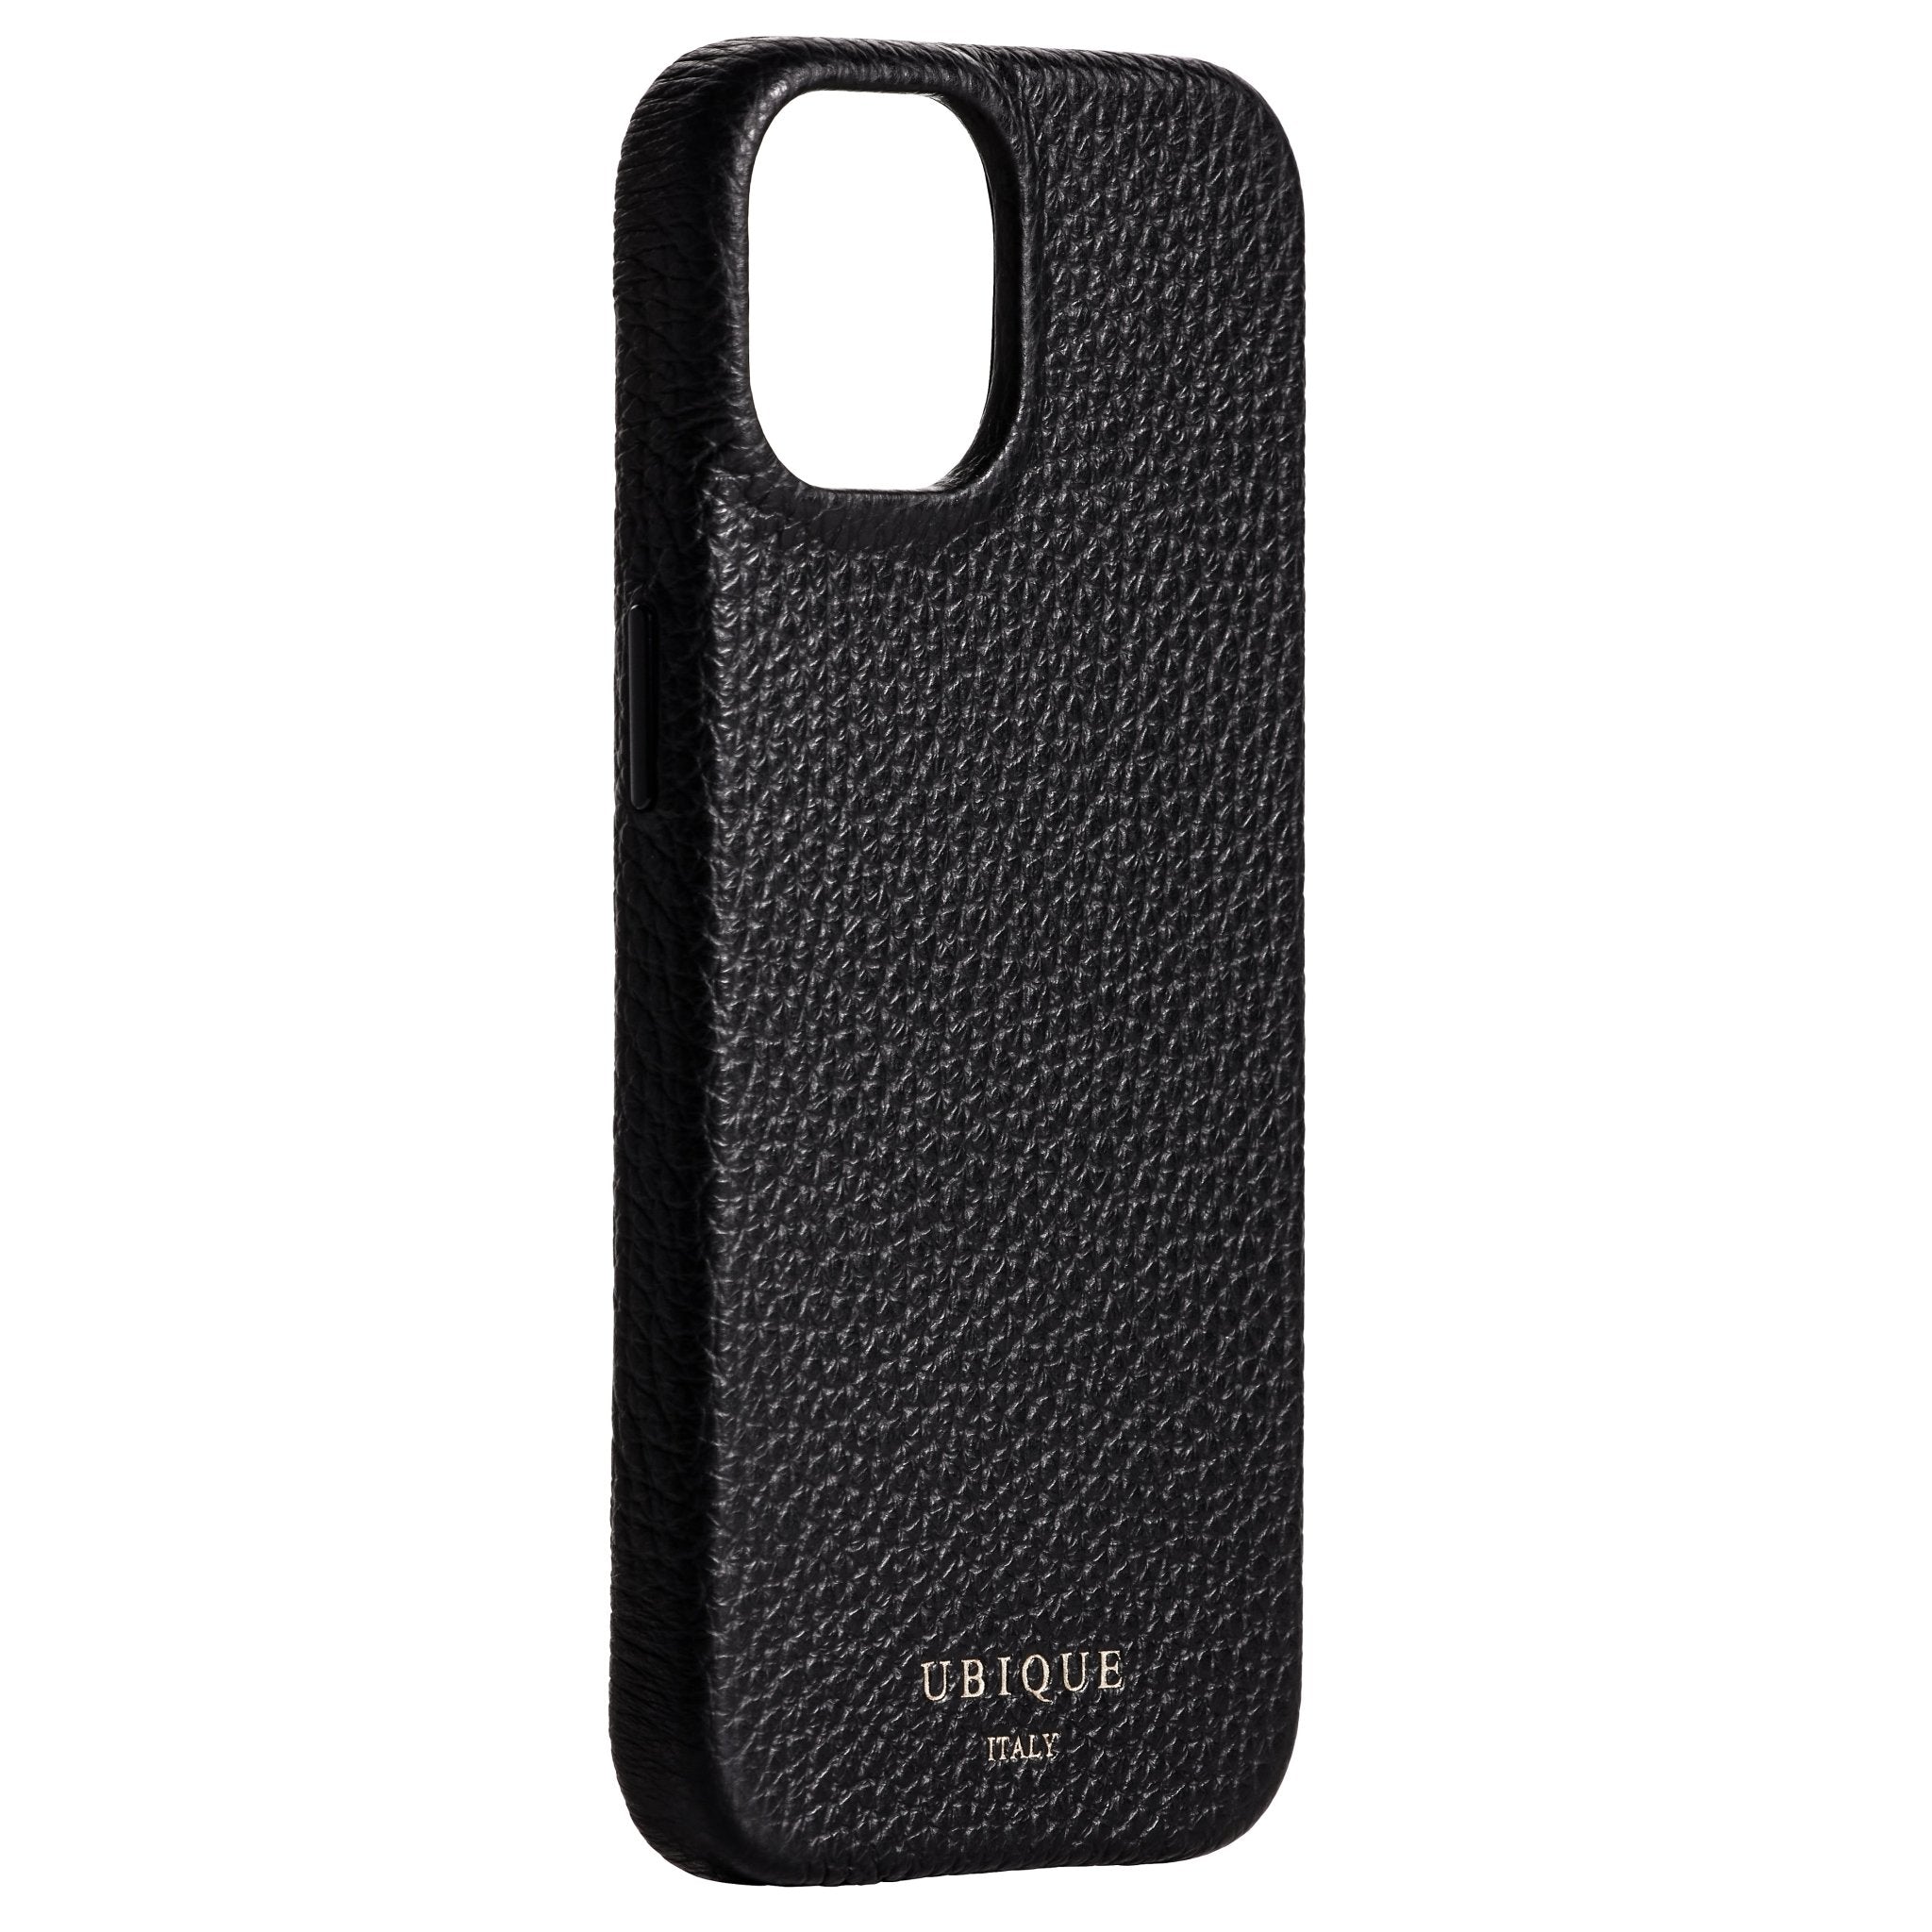 Ubique Italy Luxury iPhone Case 14 Pebble Grain Leather Black Angled